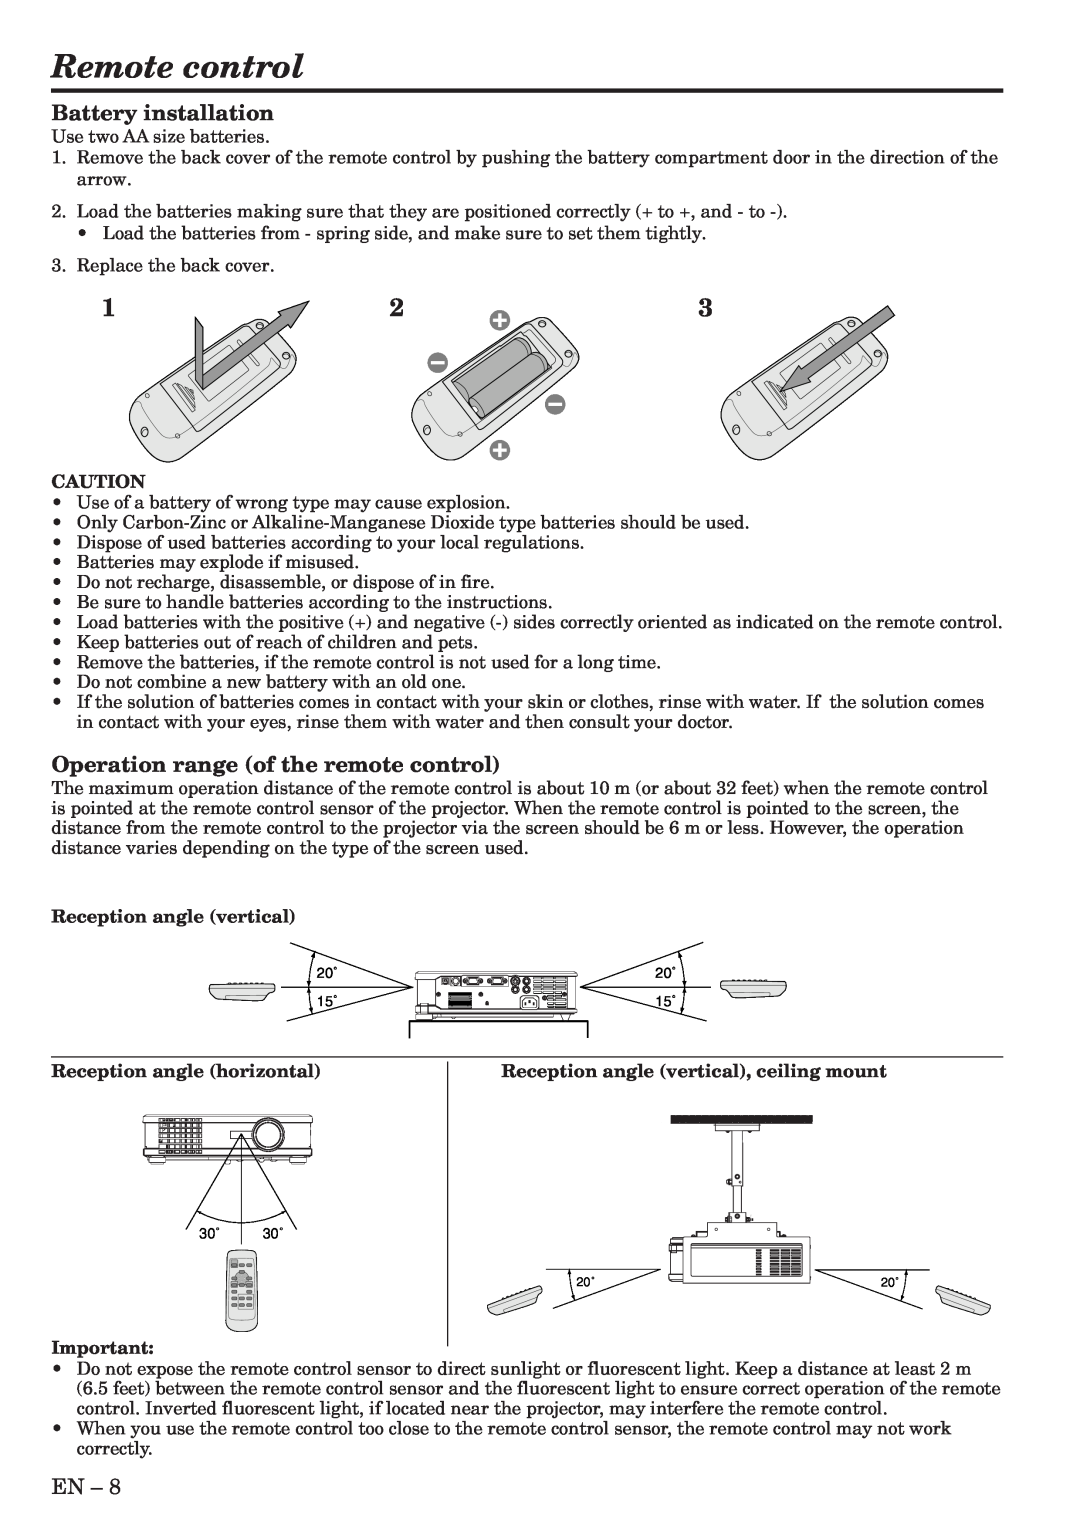 Mitsubishi Electronics XL6U user manual Remote control, Battery installation, Operation range of the remote control 